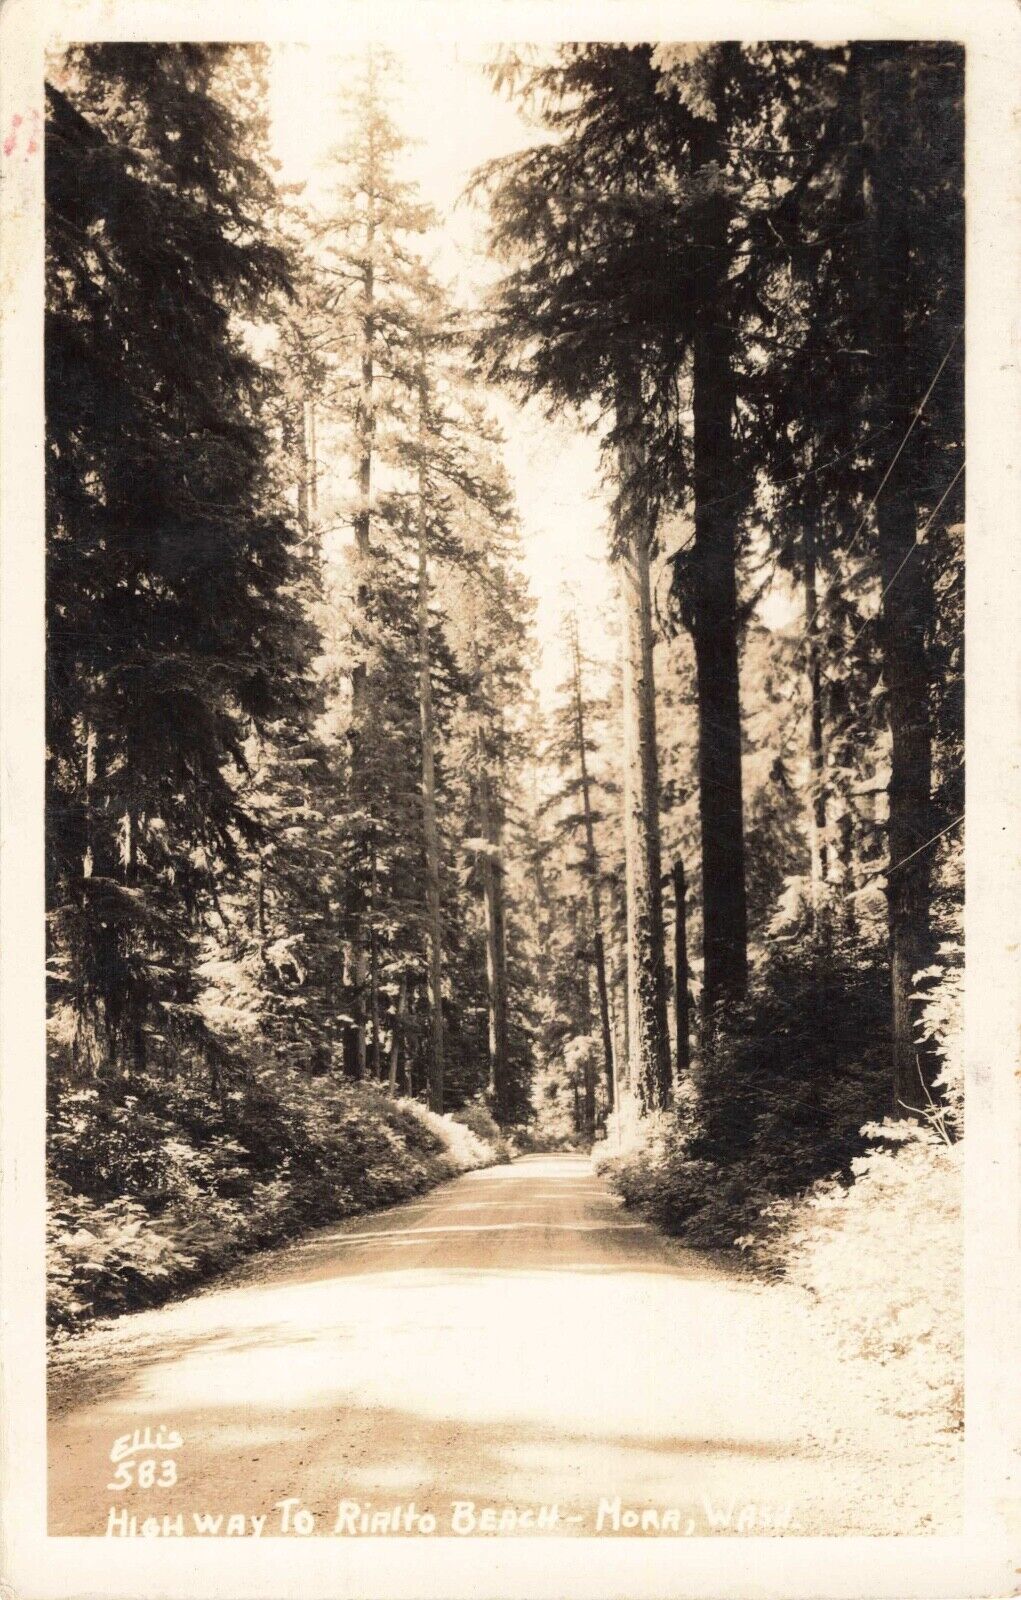 Highway to Rialto Beach Mora Washington WA 1942 Ellis Real Photo RPPC